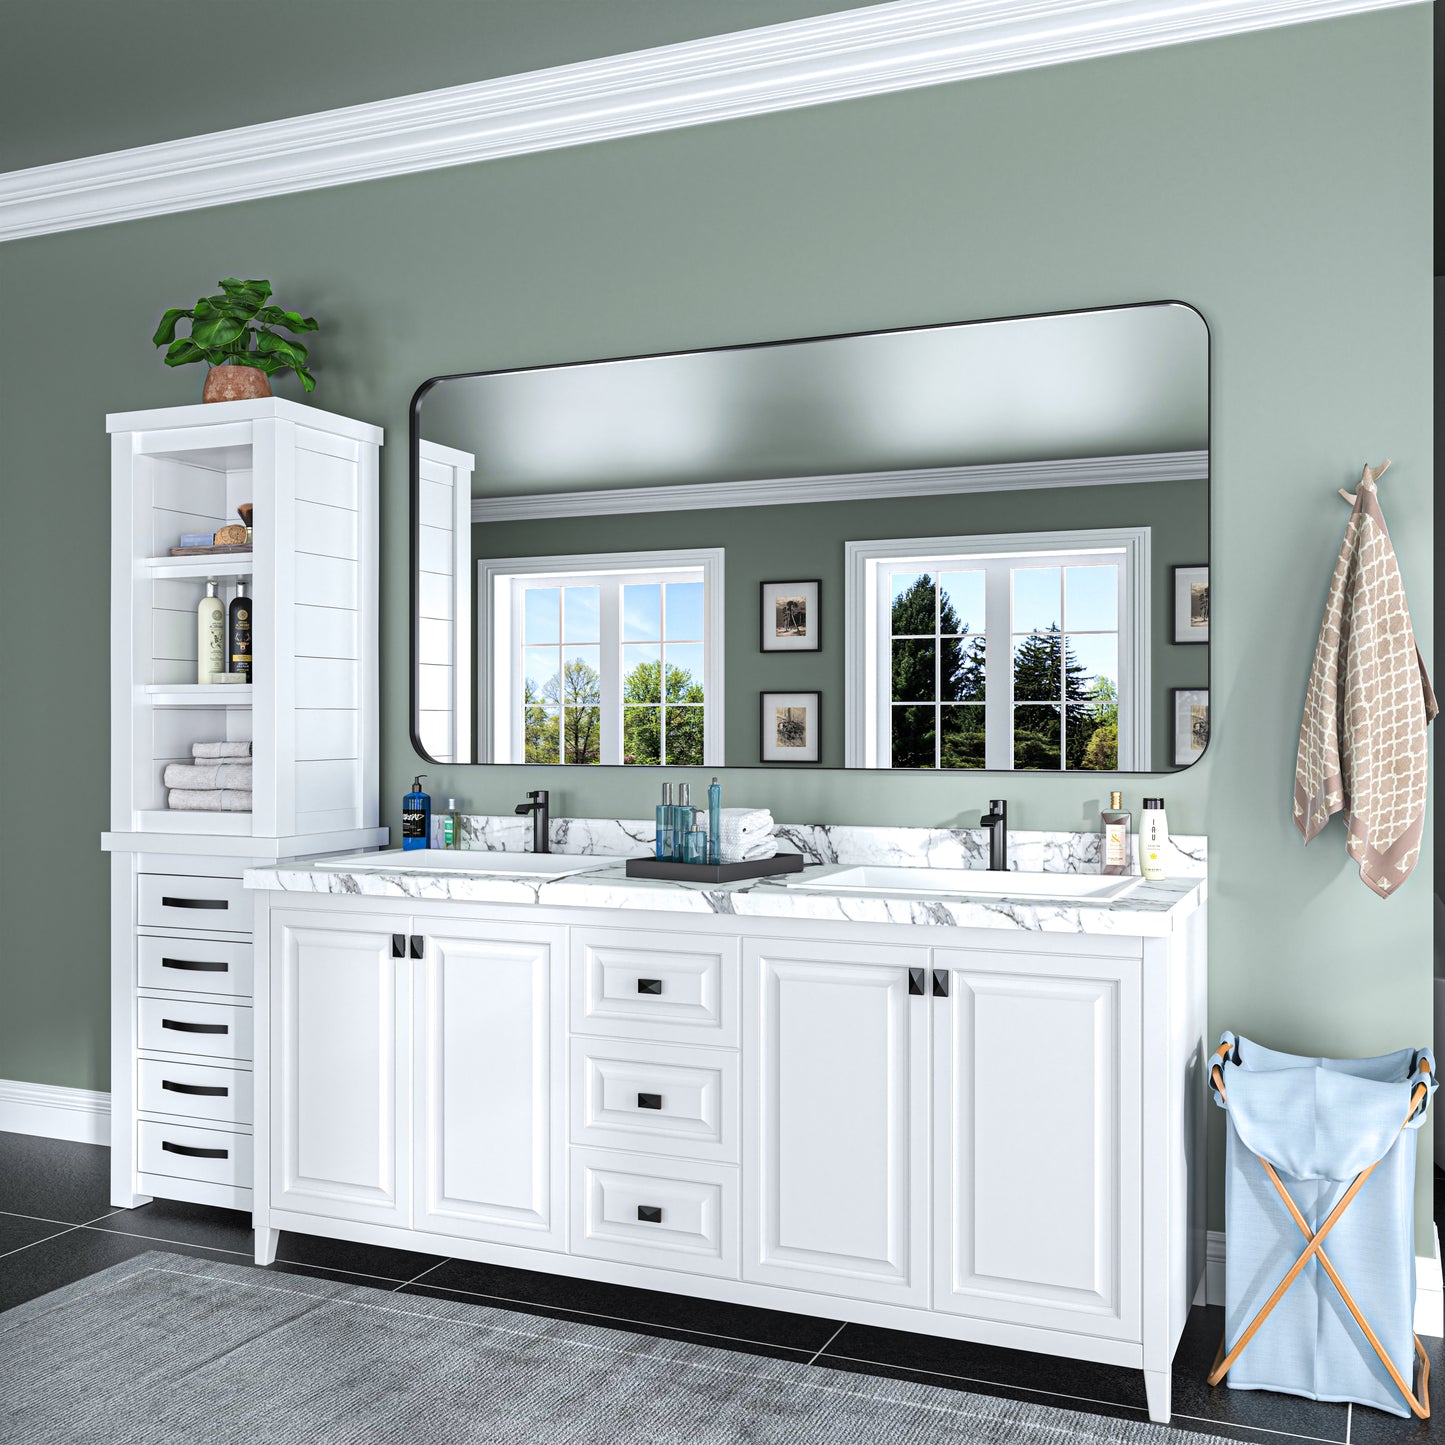 Waterpar®  72 in. W x 36 in. H Rectangular Aluminum Framed Wall Bathroom Vanity Mirror